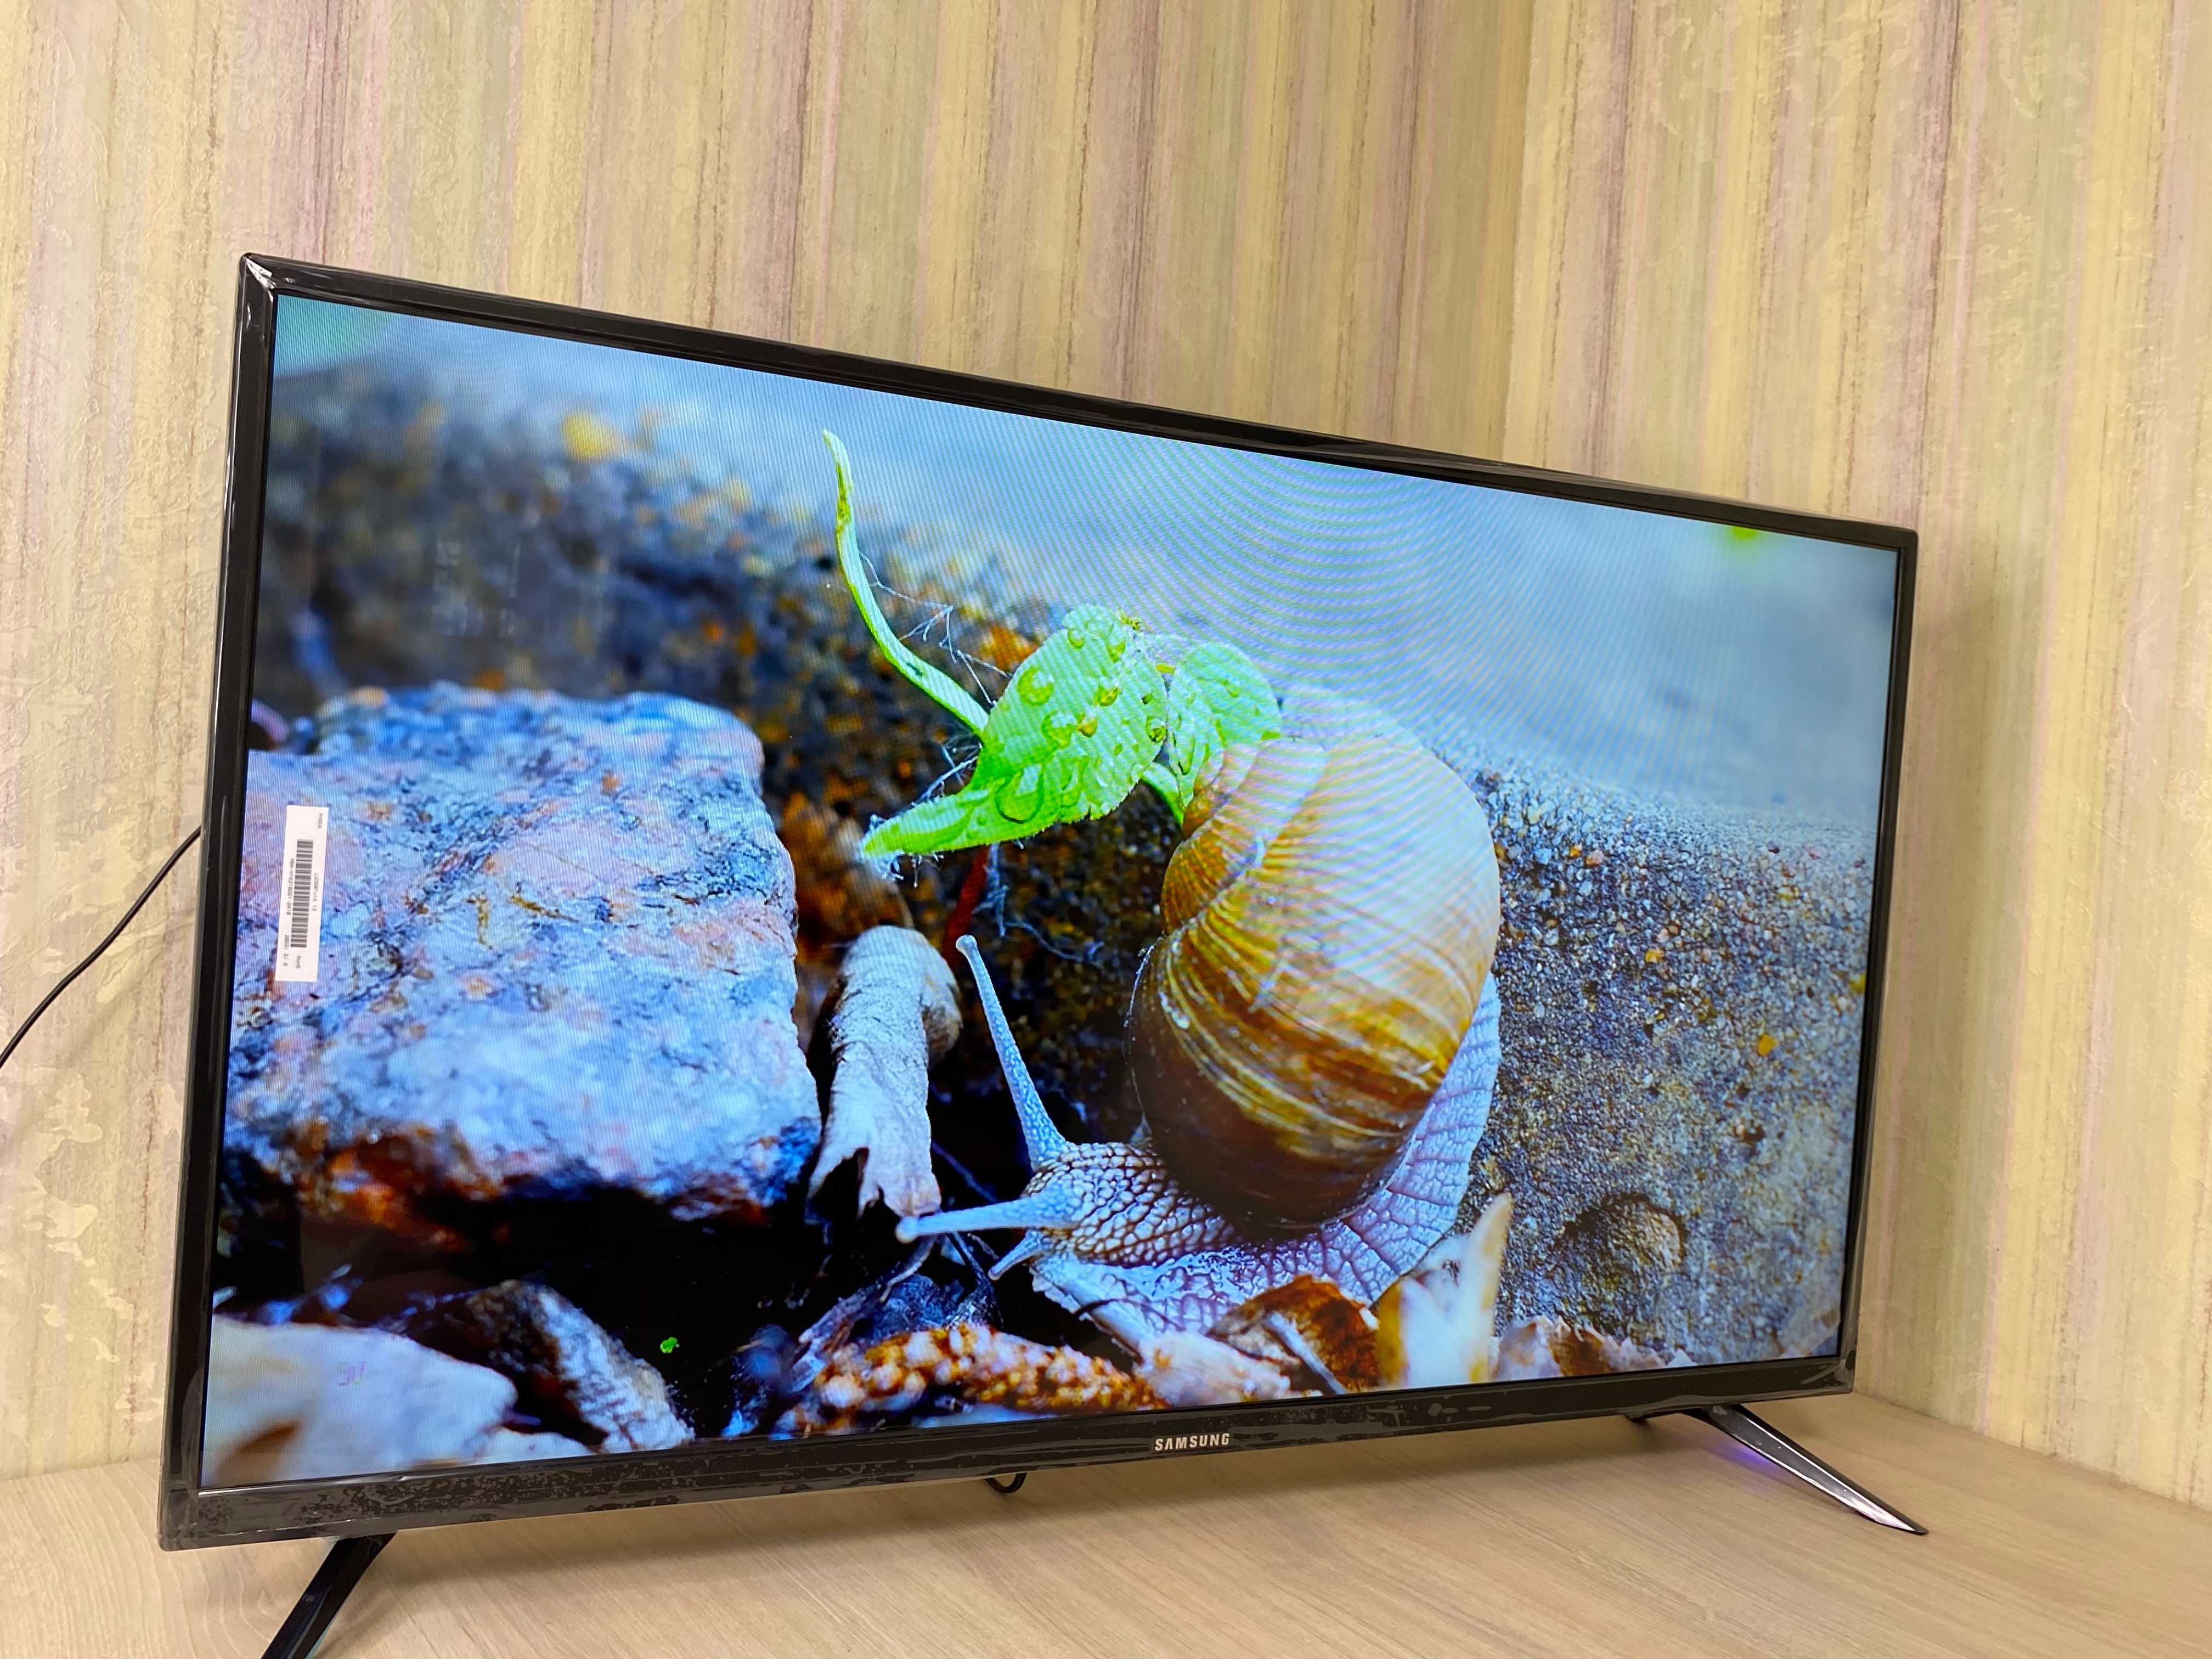 ТЕЛЕВІЗОР Samsung 32'' 4K HDR SMART TV Самсунг Wi-Fi  ГОЛОСОВОЙ пульт